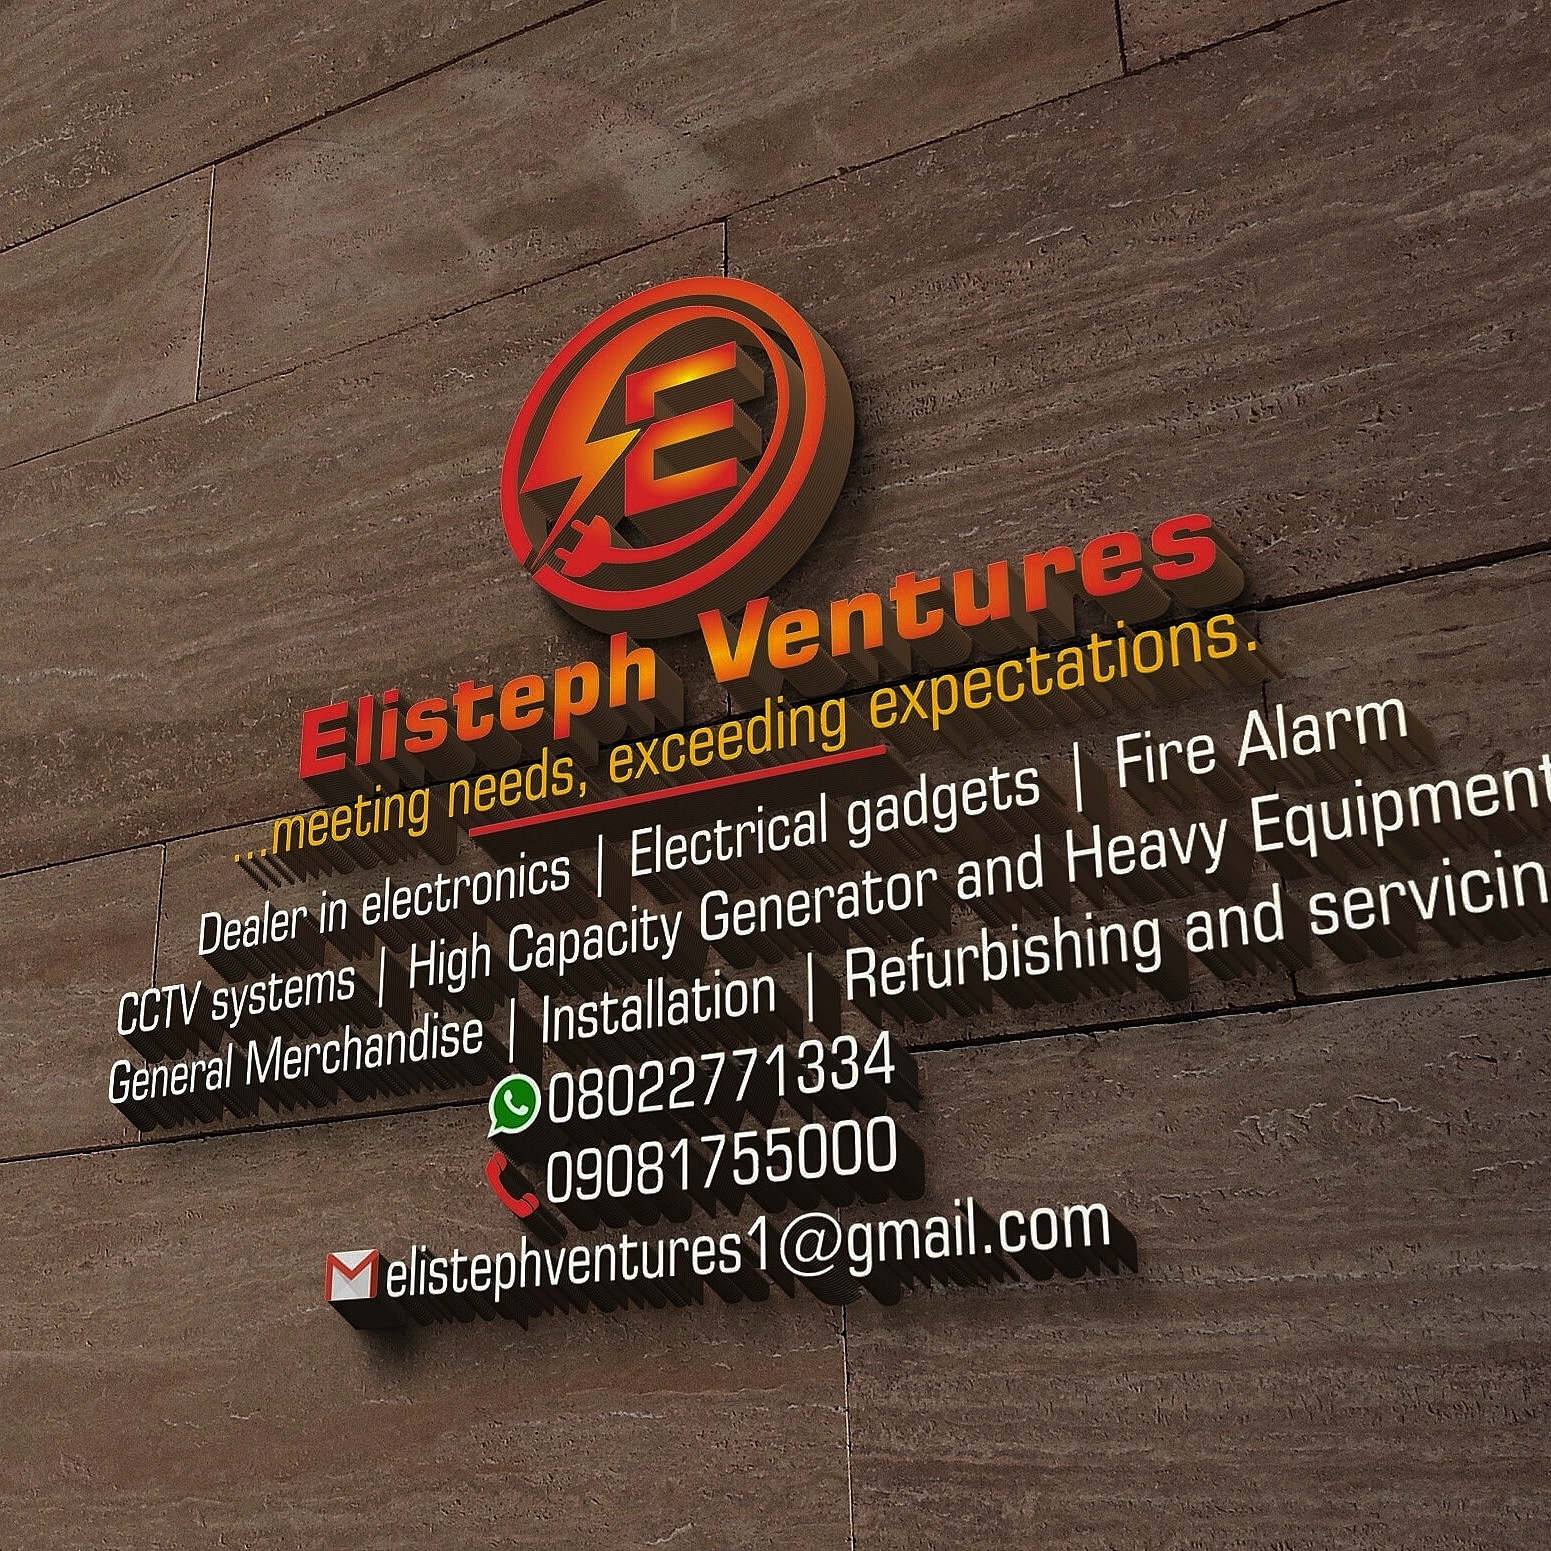 ELISTEPH VENTURES provider